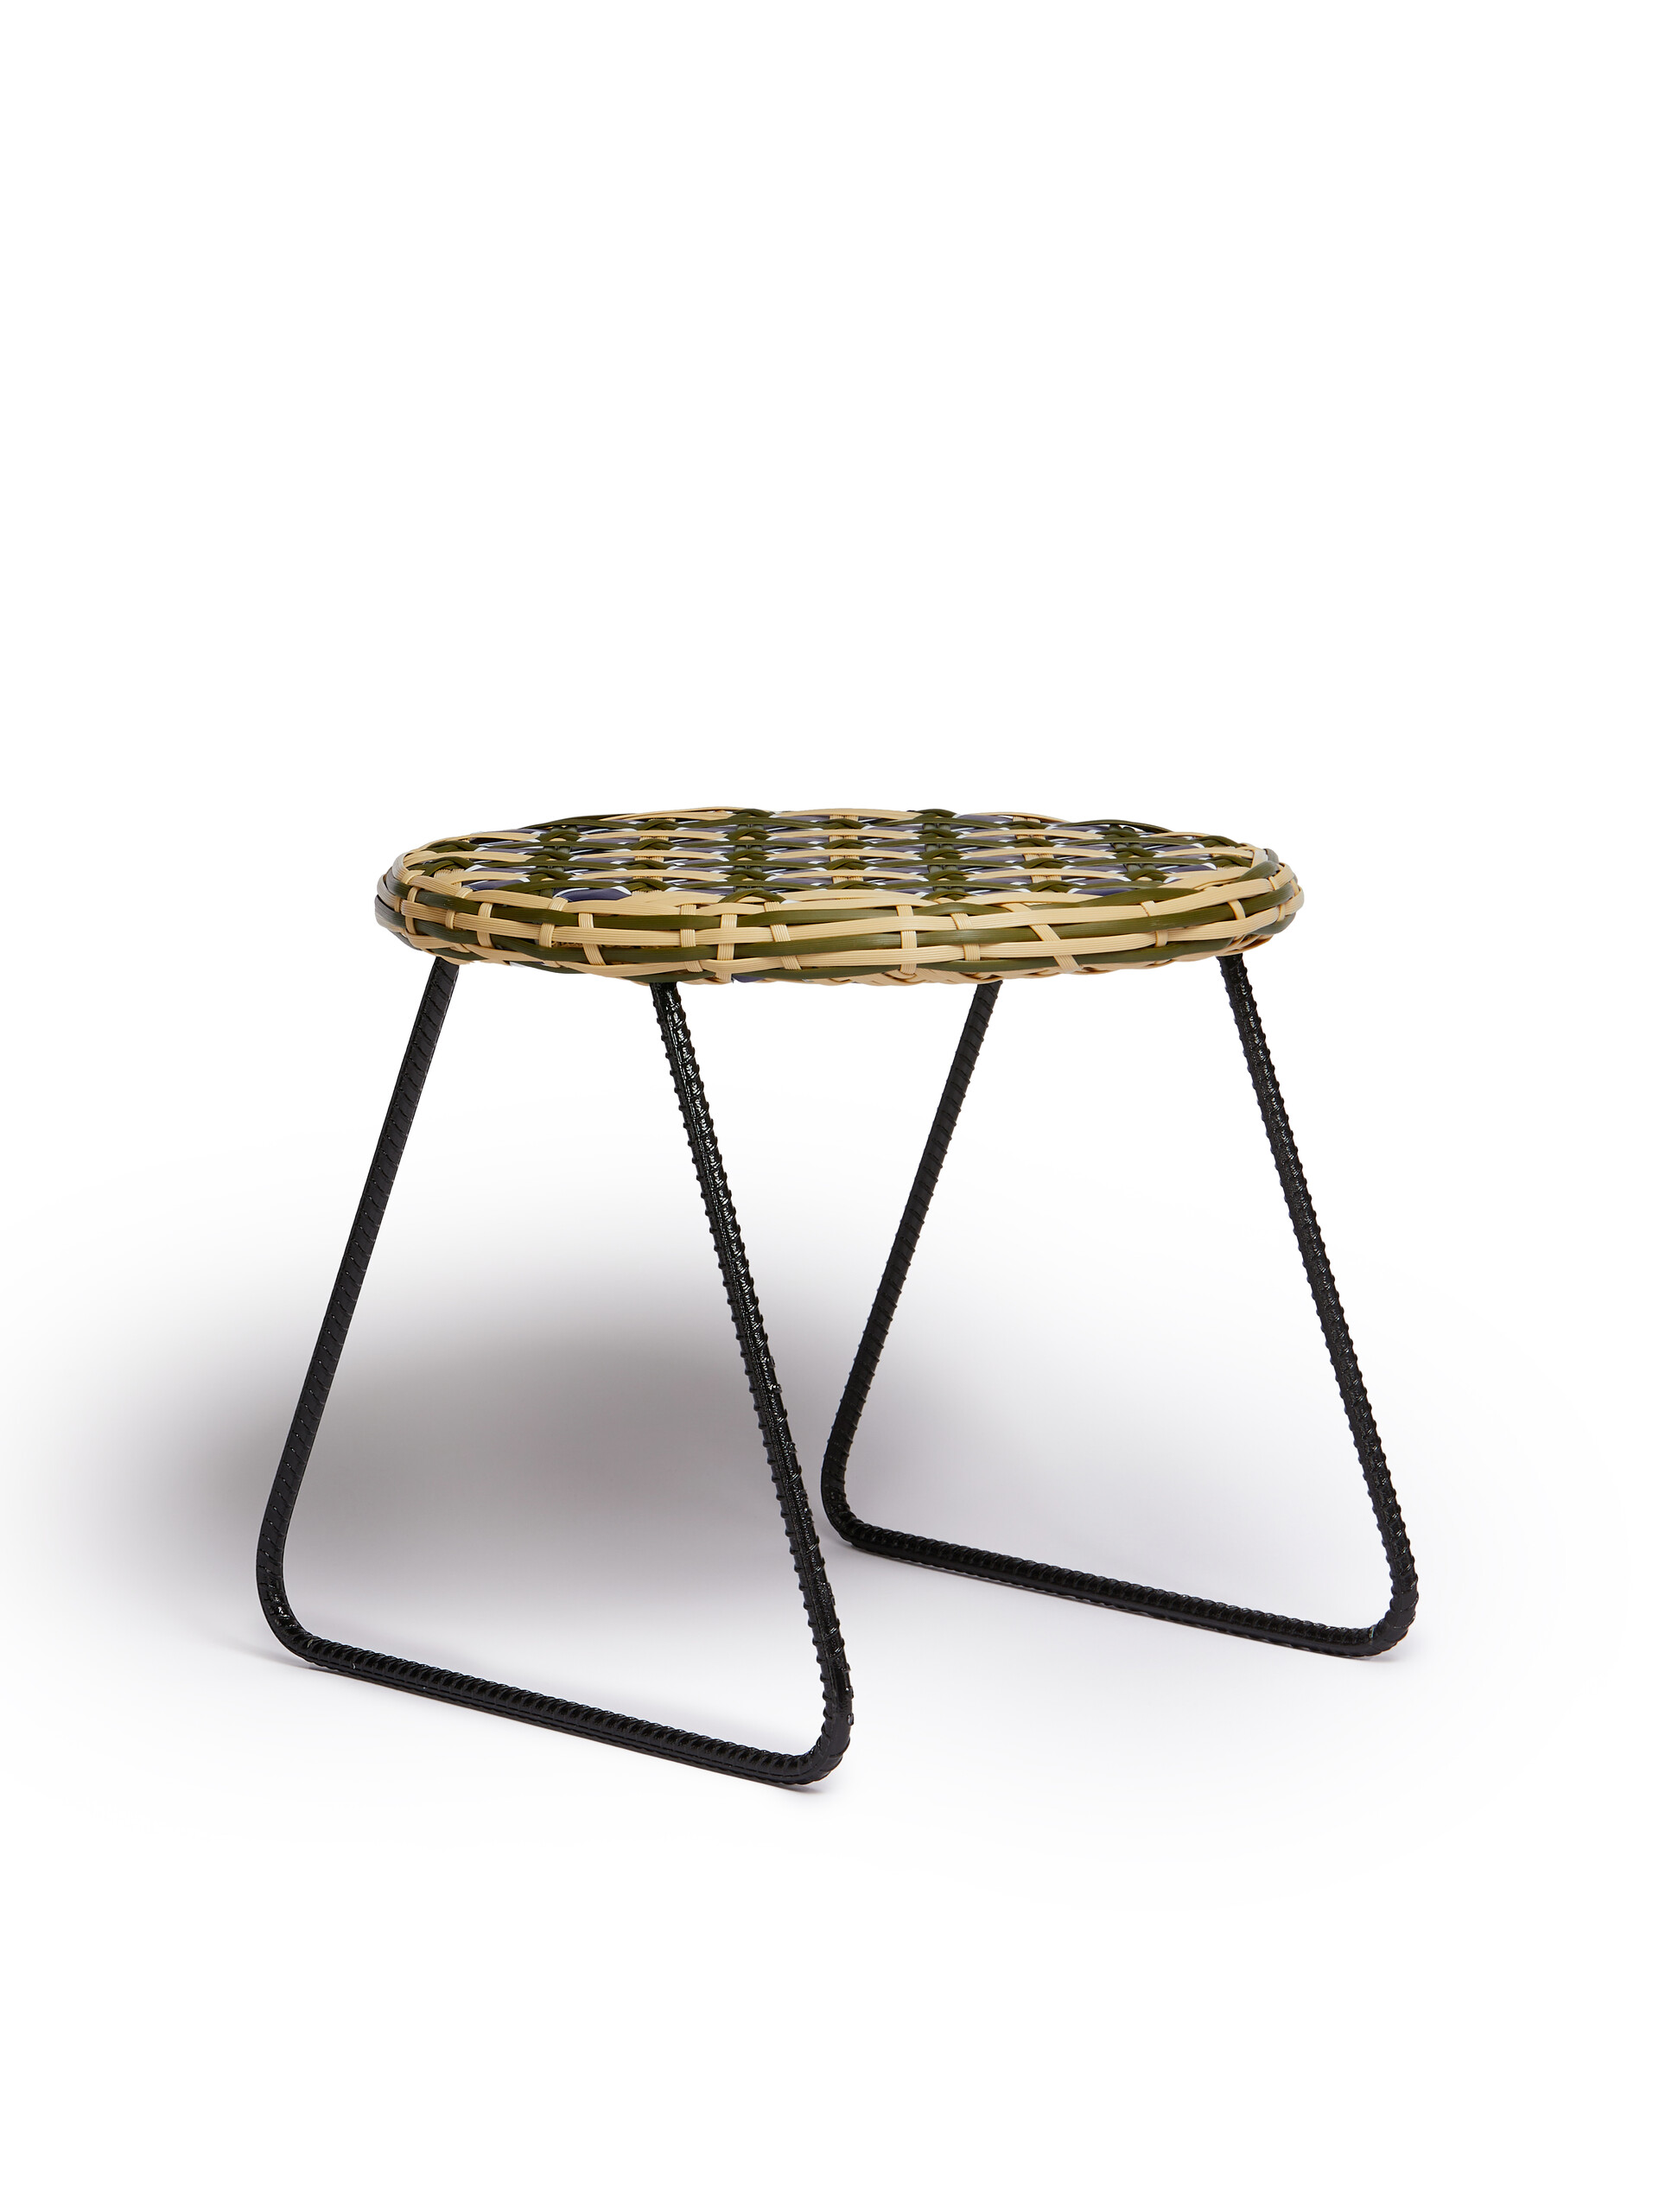 Natural MARNI MARKET stool - Furniture - Image 2